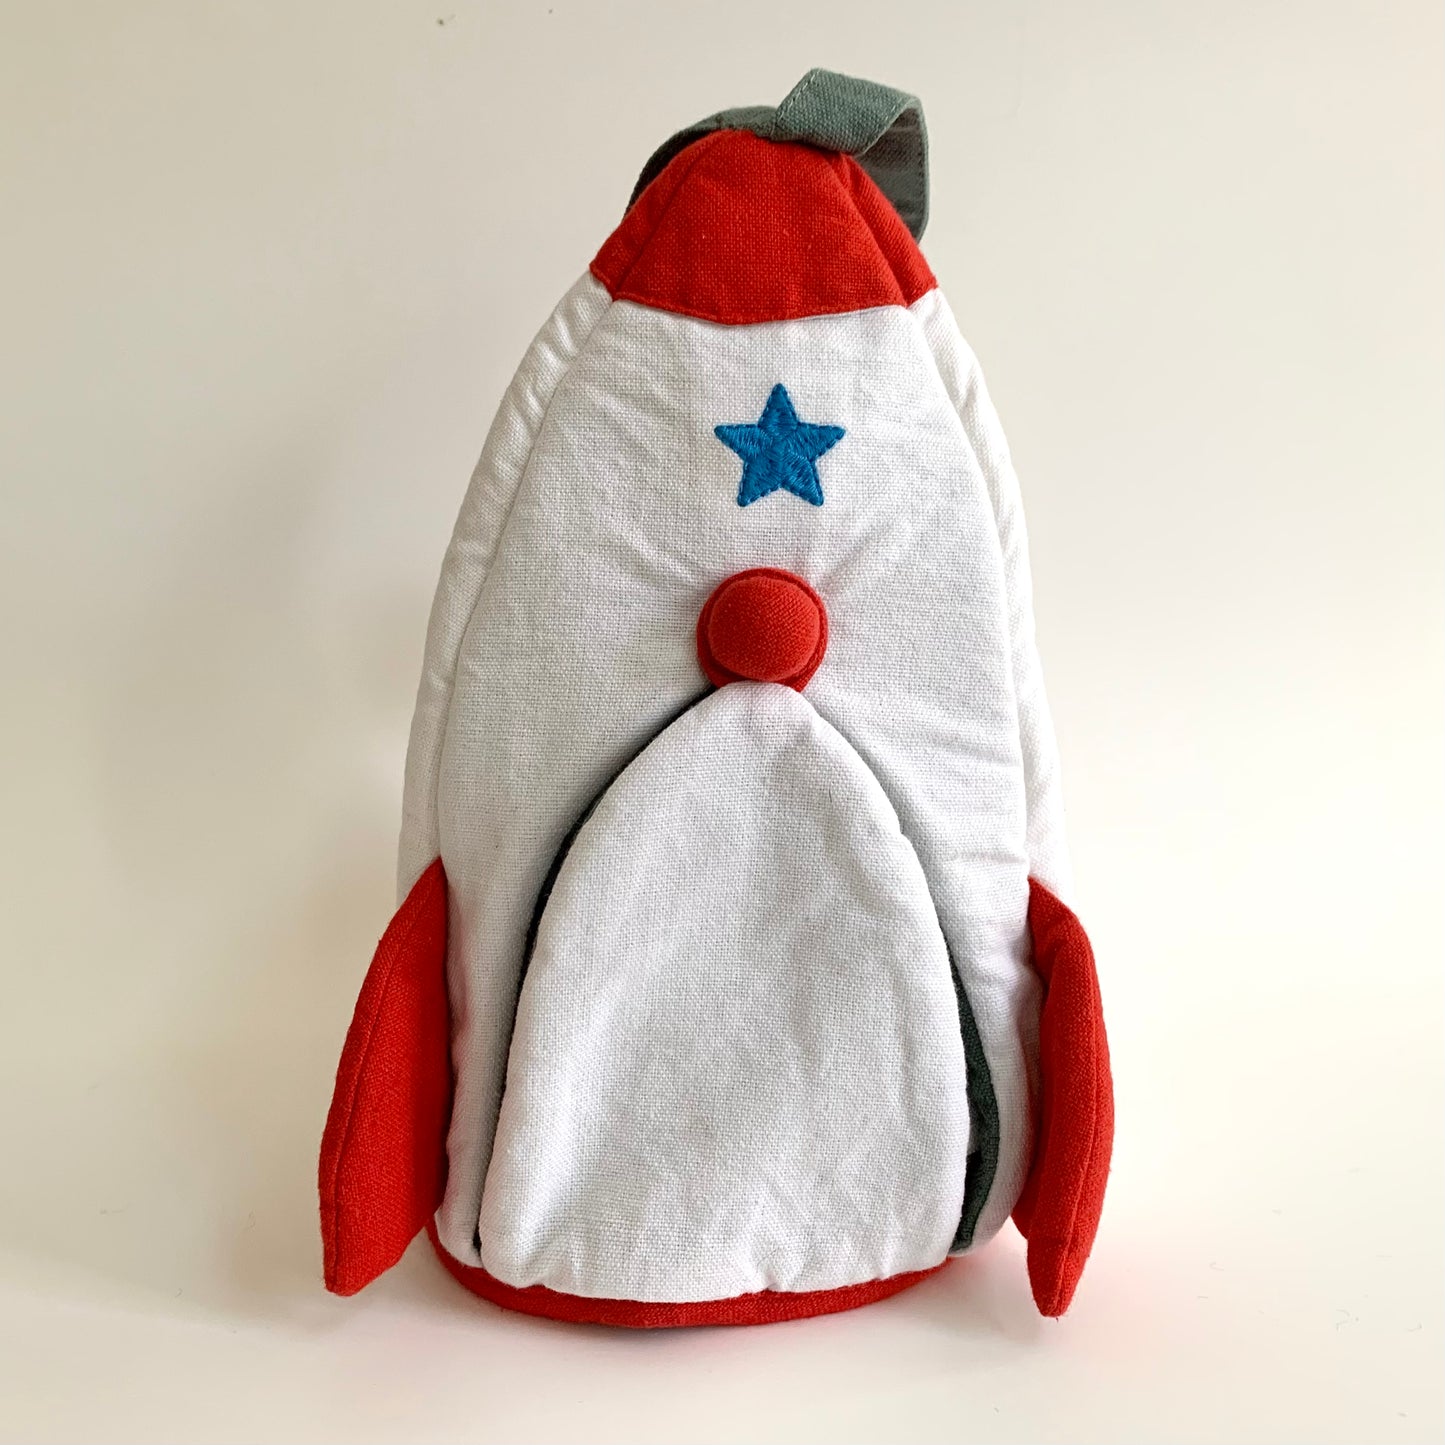 Handmade rocket ship toy